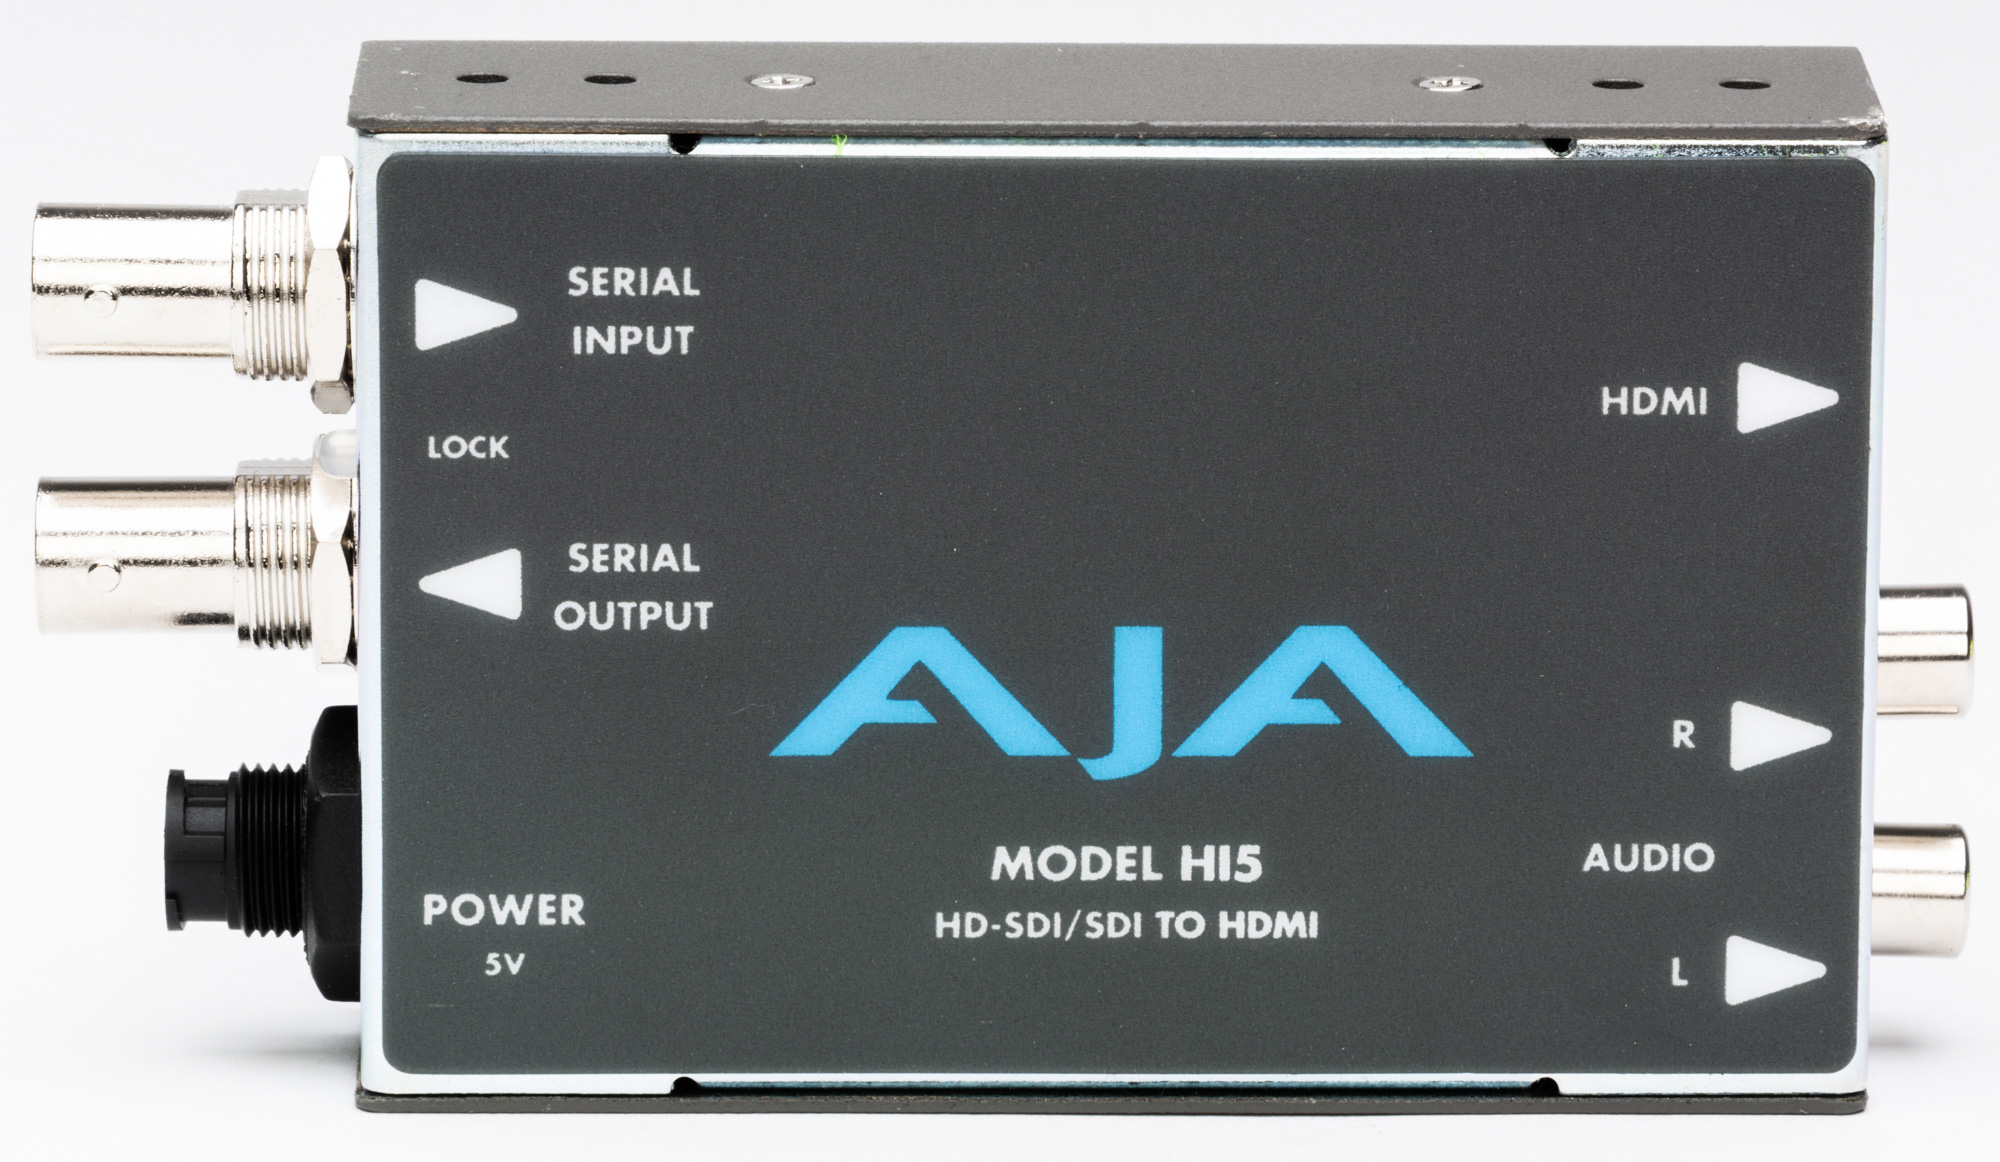 AJA Hi5 HD-SDI/SDI to HDMI Video and Audio Converter - B-Stock